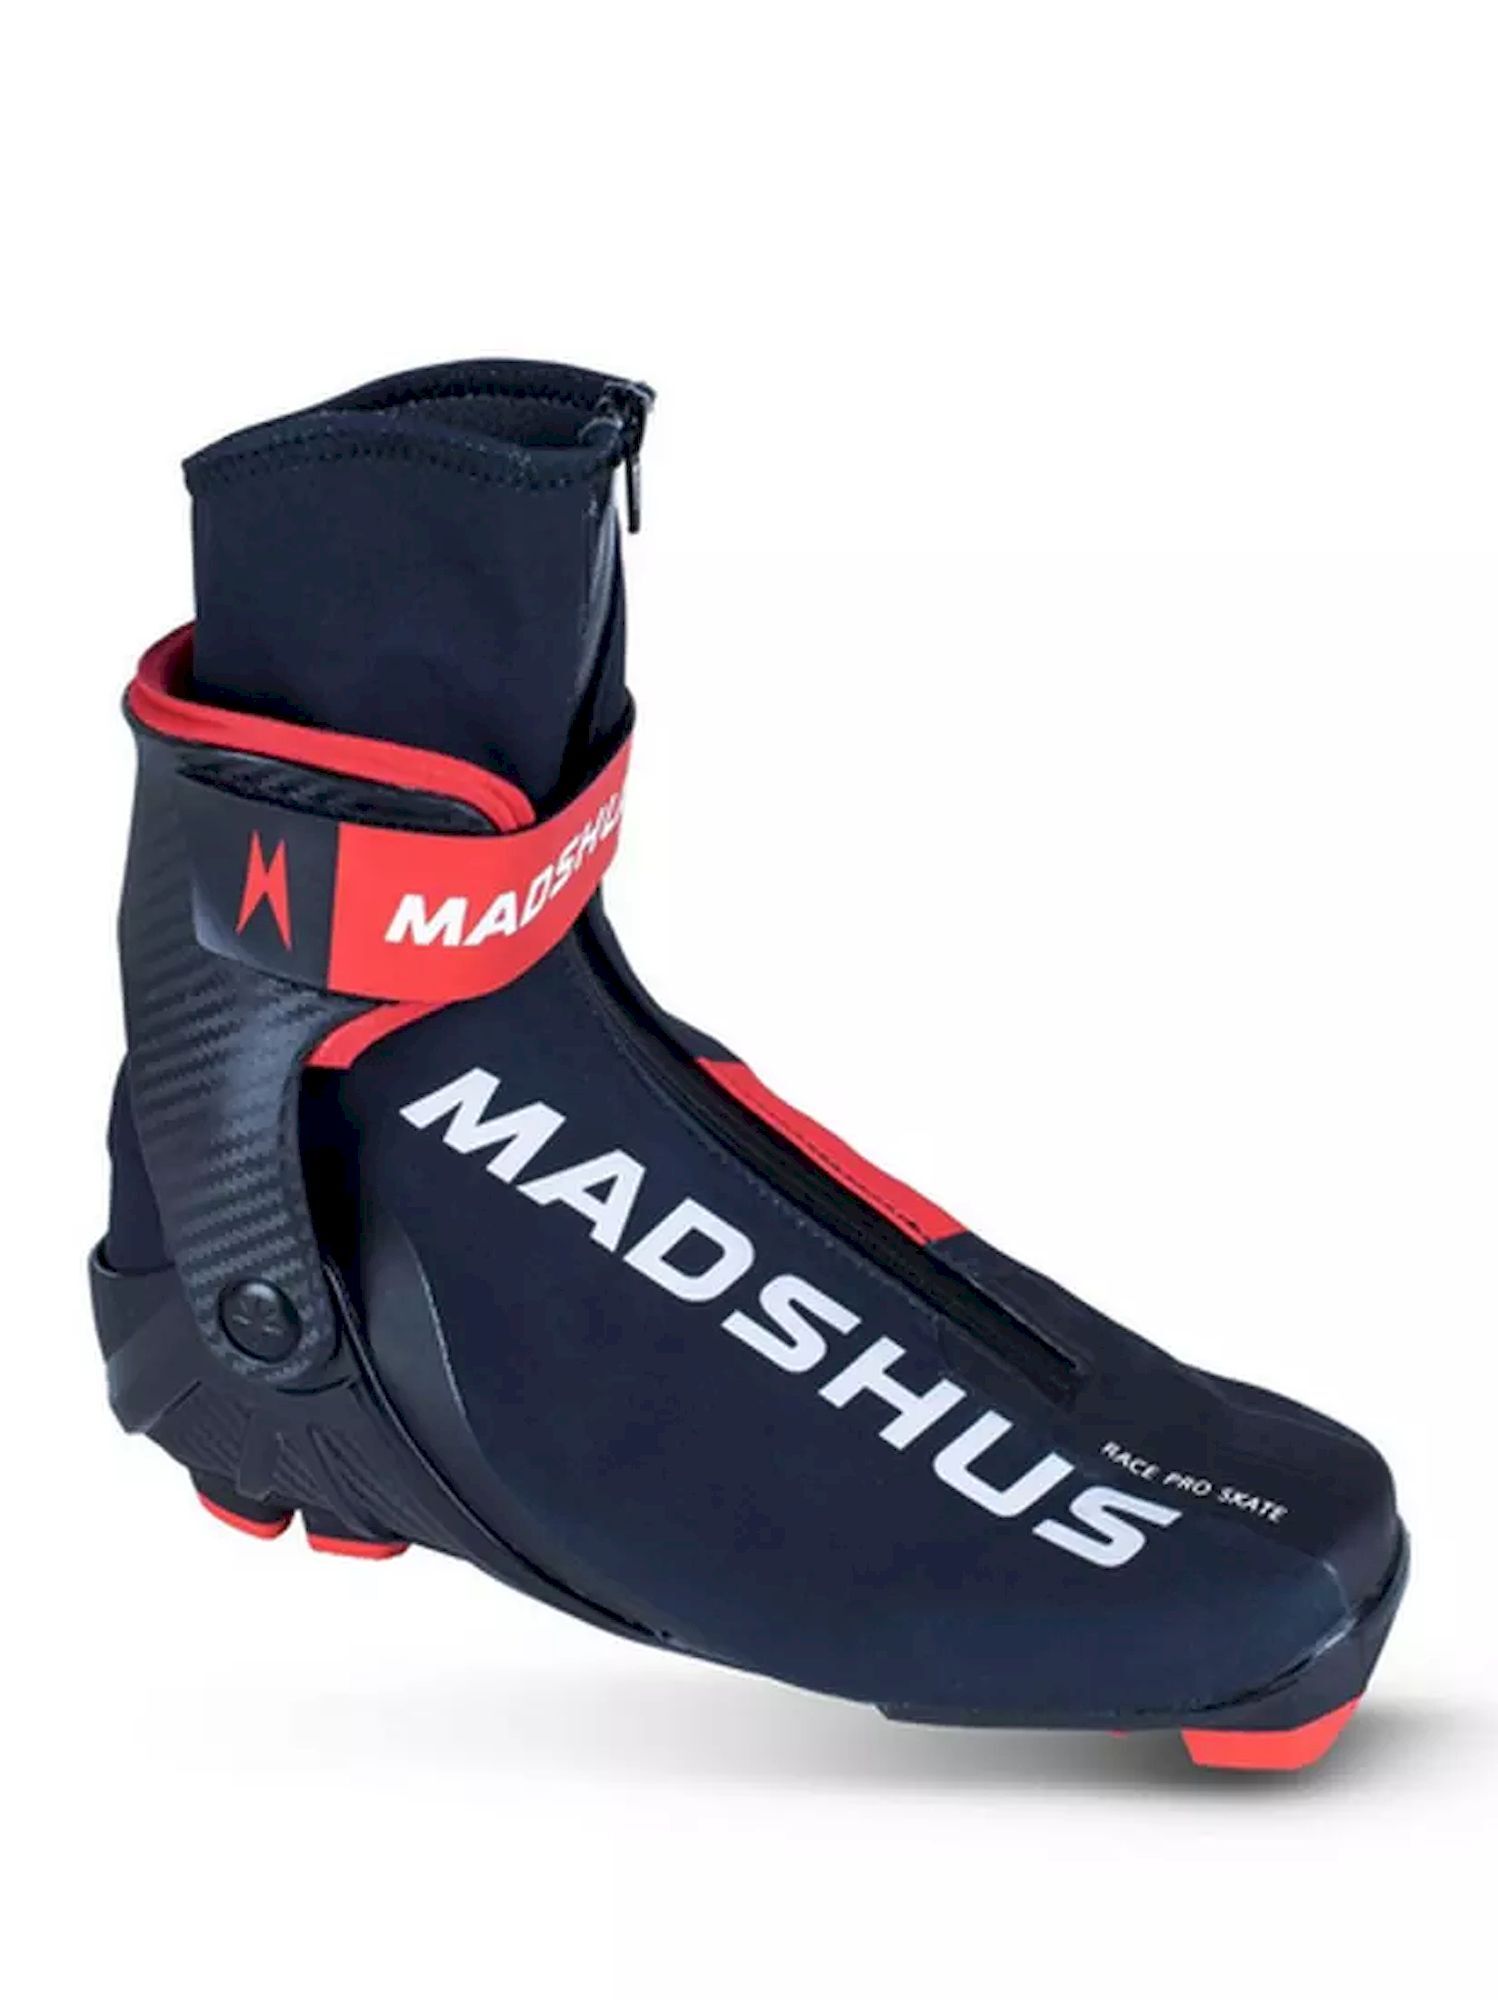 Madshus Race Pro Skate - Scarponi sci di fondo | Hardloop